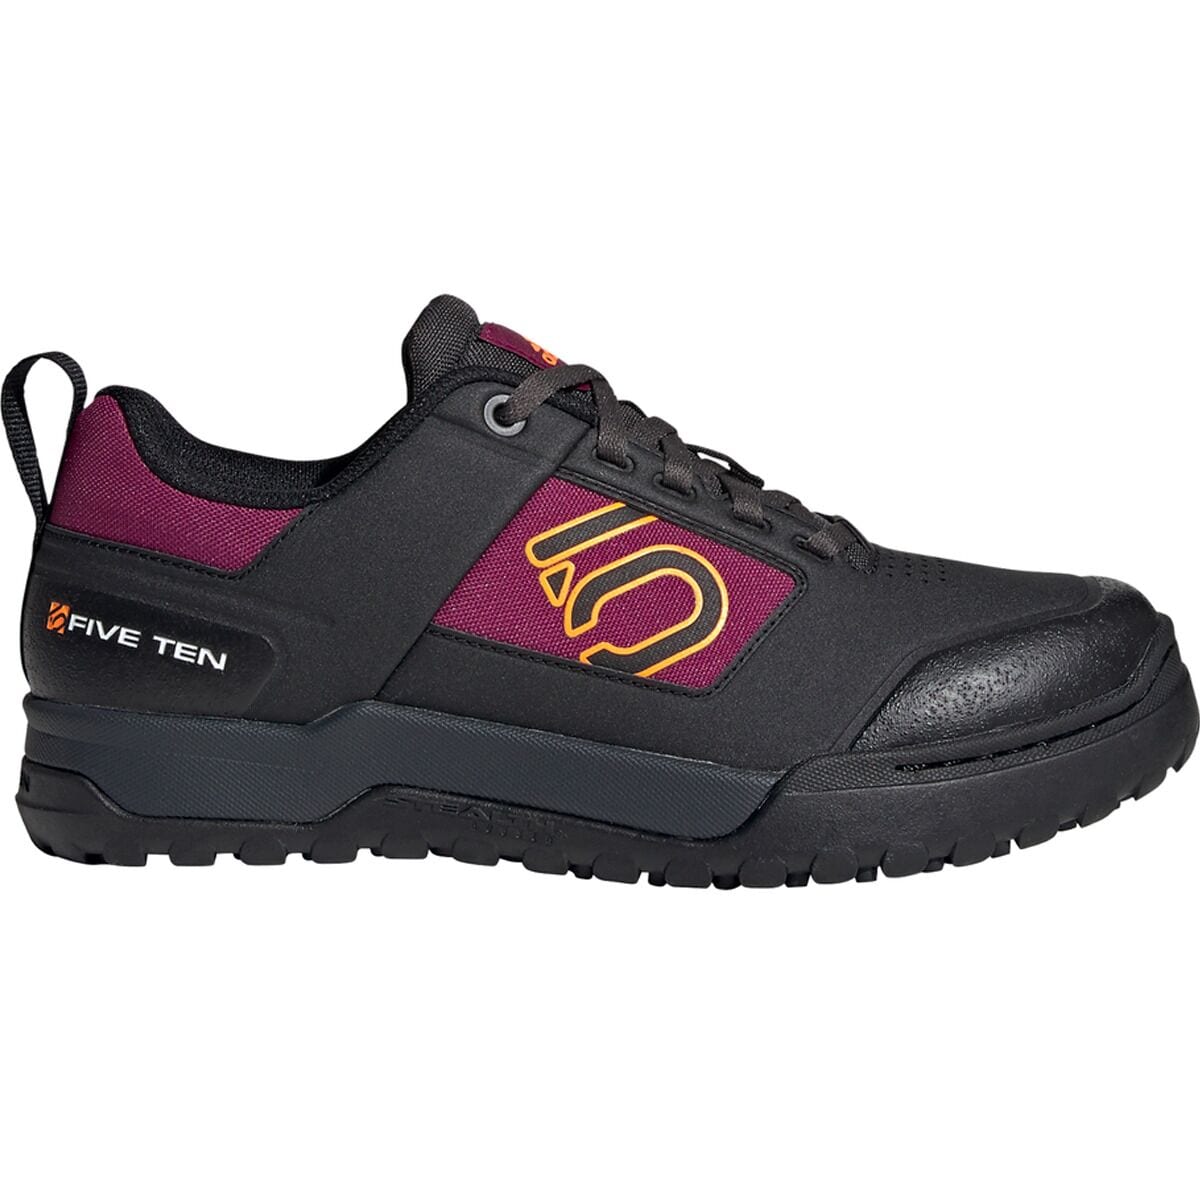 Five Ten Impact Pro Shoe - Women's Core Black/Signal Orange/Power Berry, 6.5